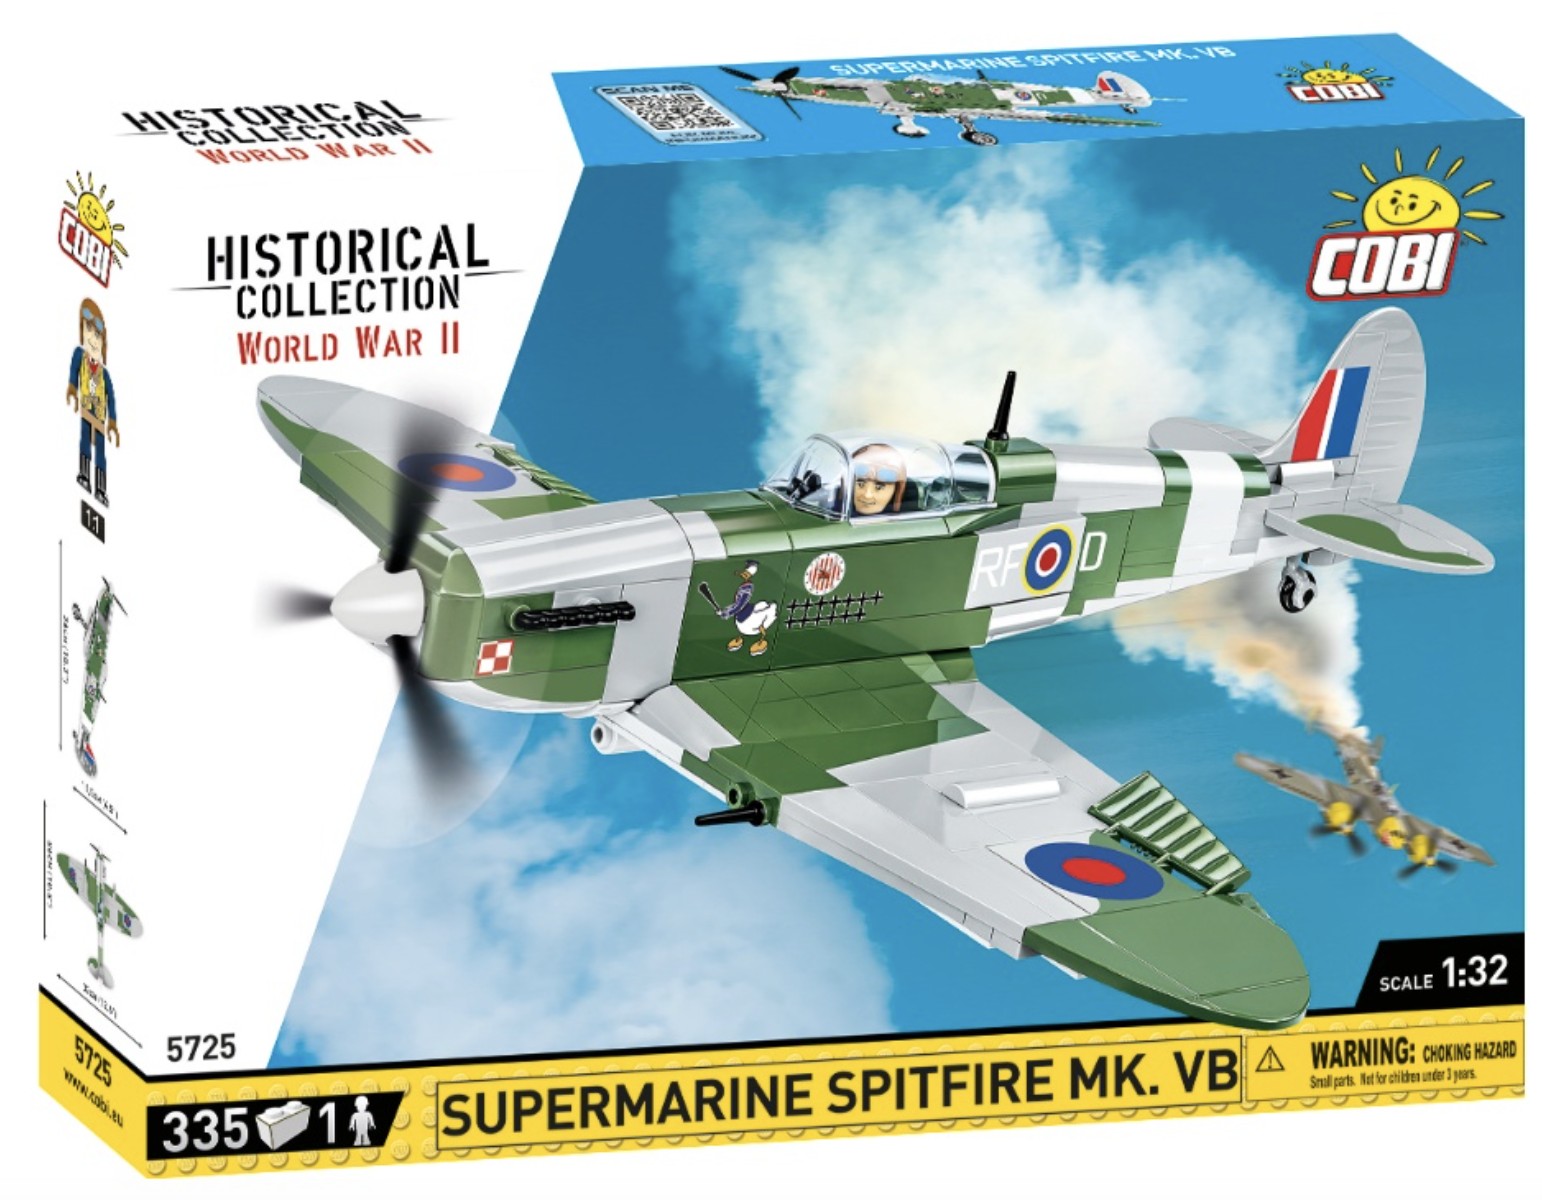 5725 - Supermarine Spitfire MK. VB